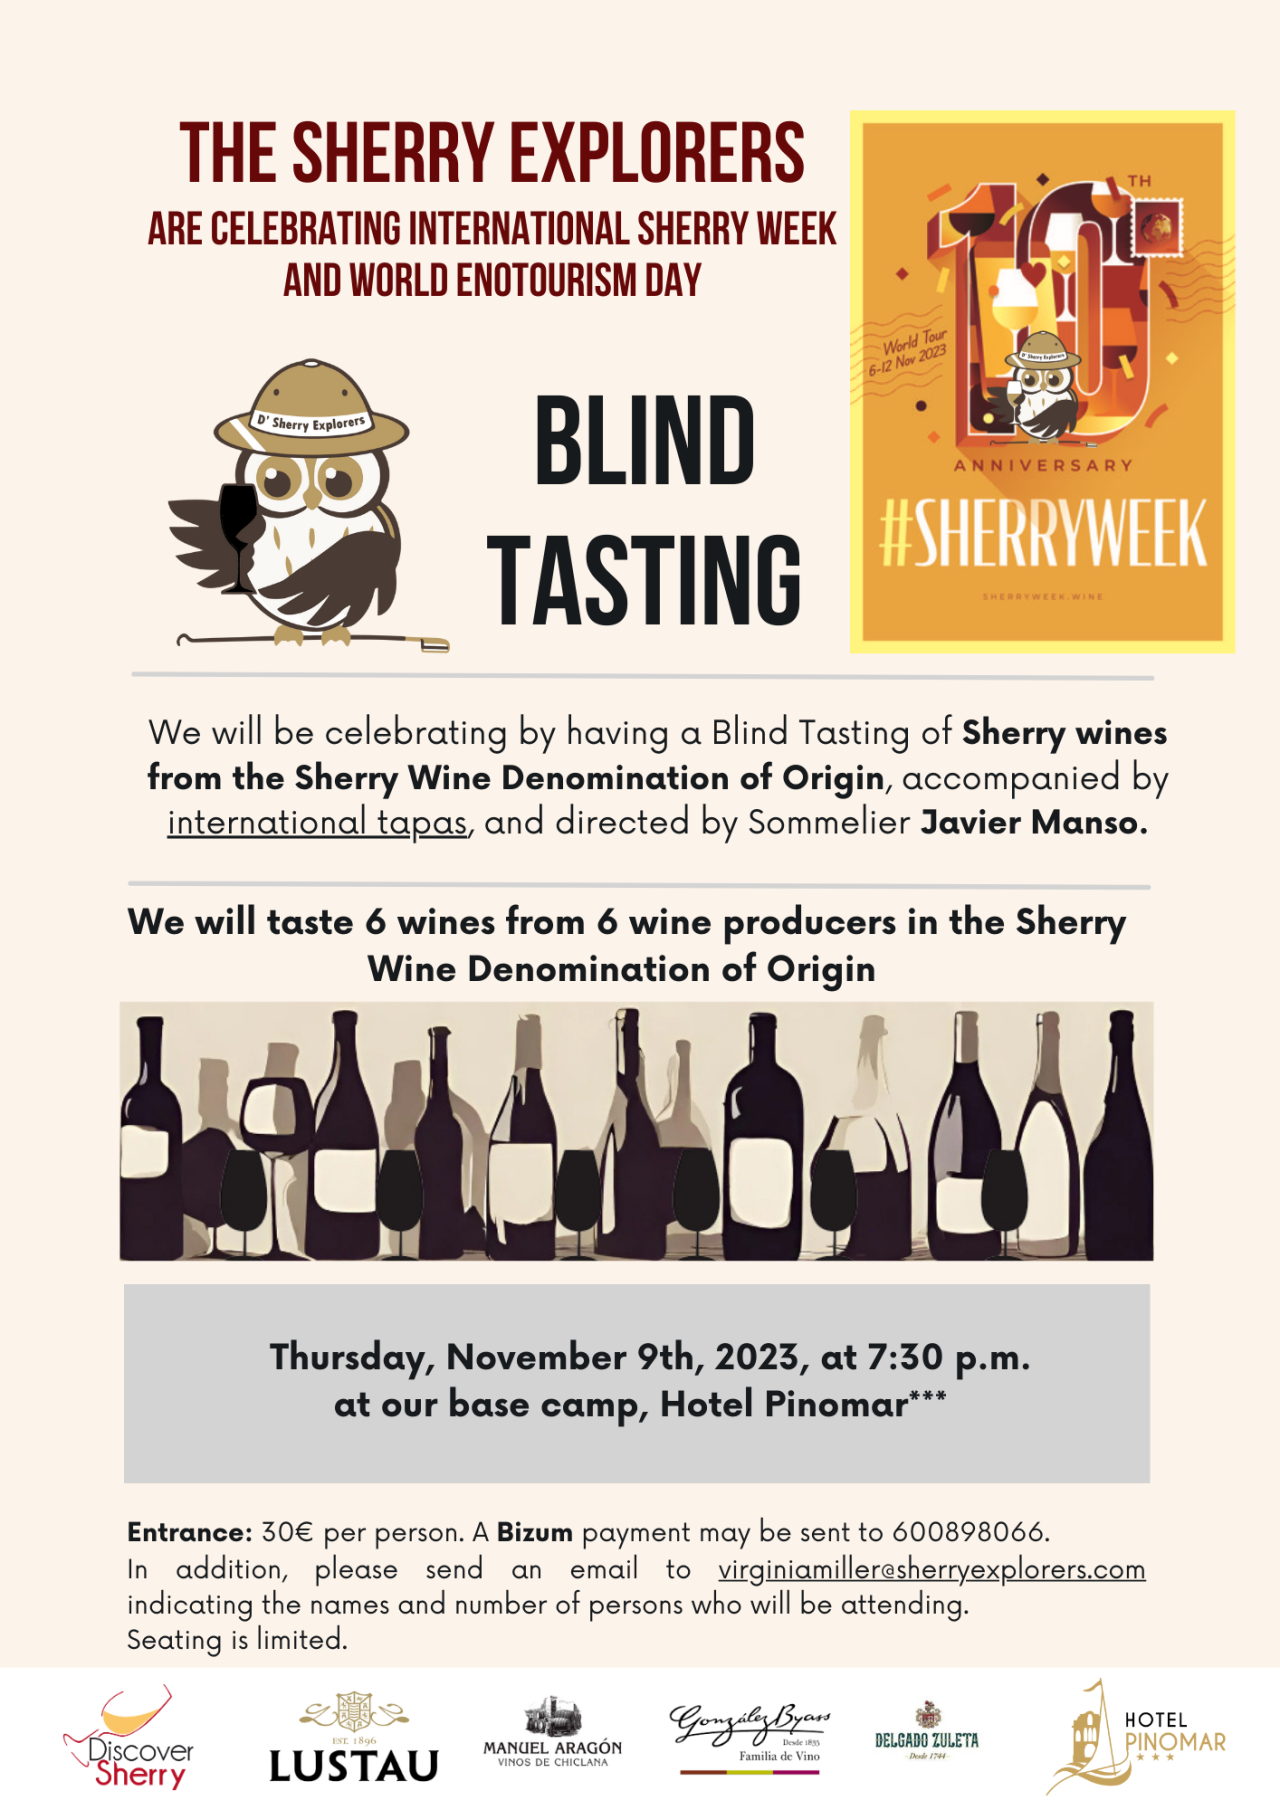 Blind Sherry Tasting and International Tapas, Celebrating the International Sherry Week